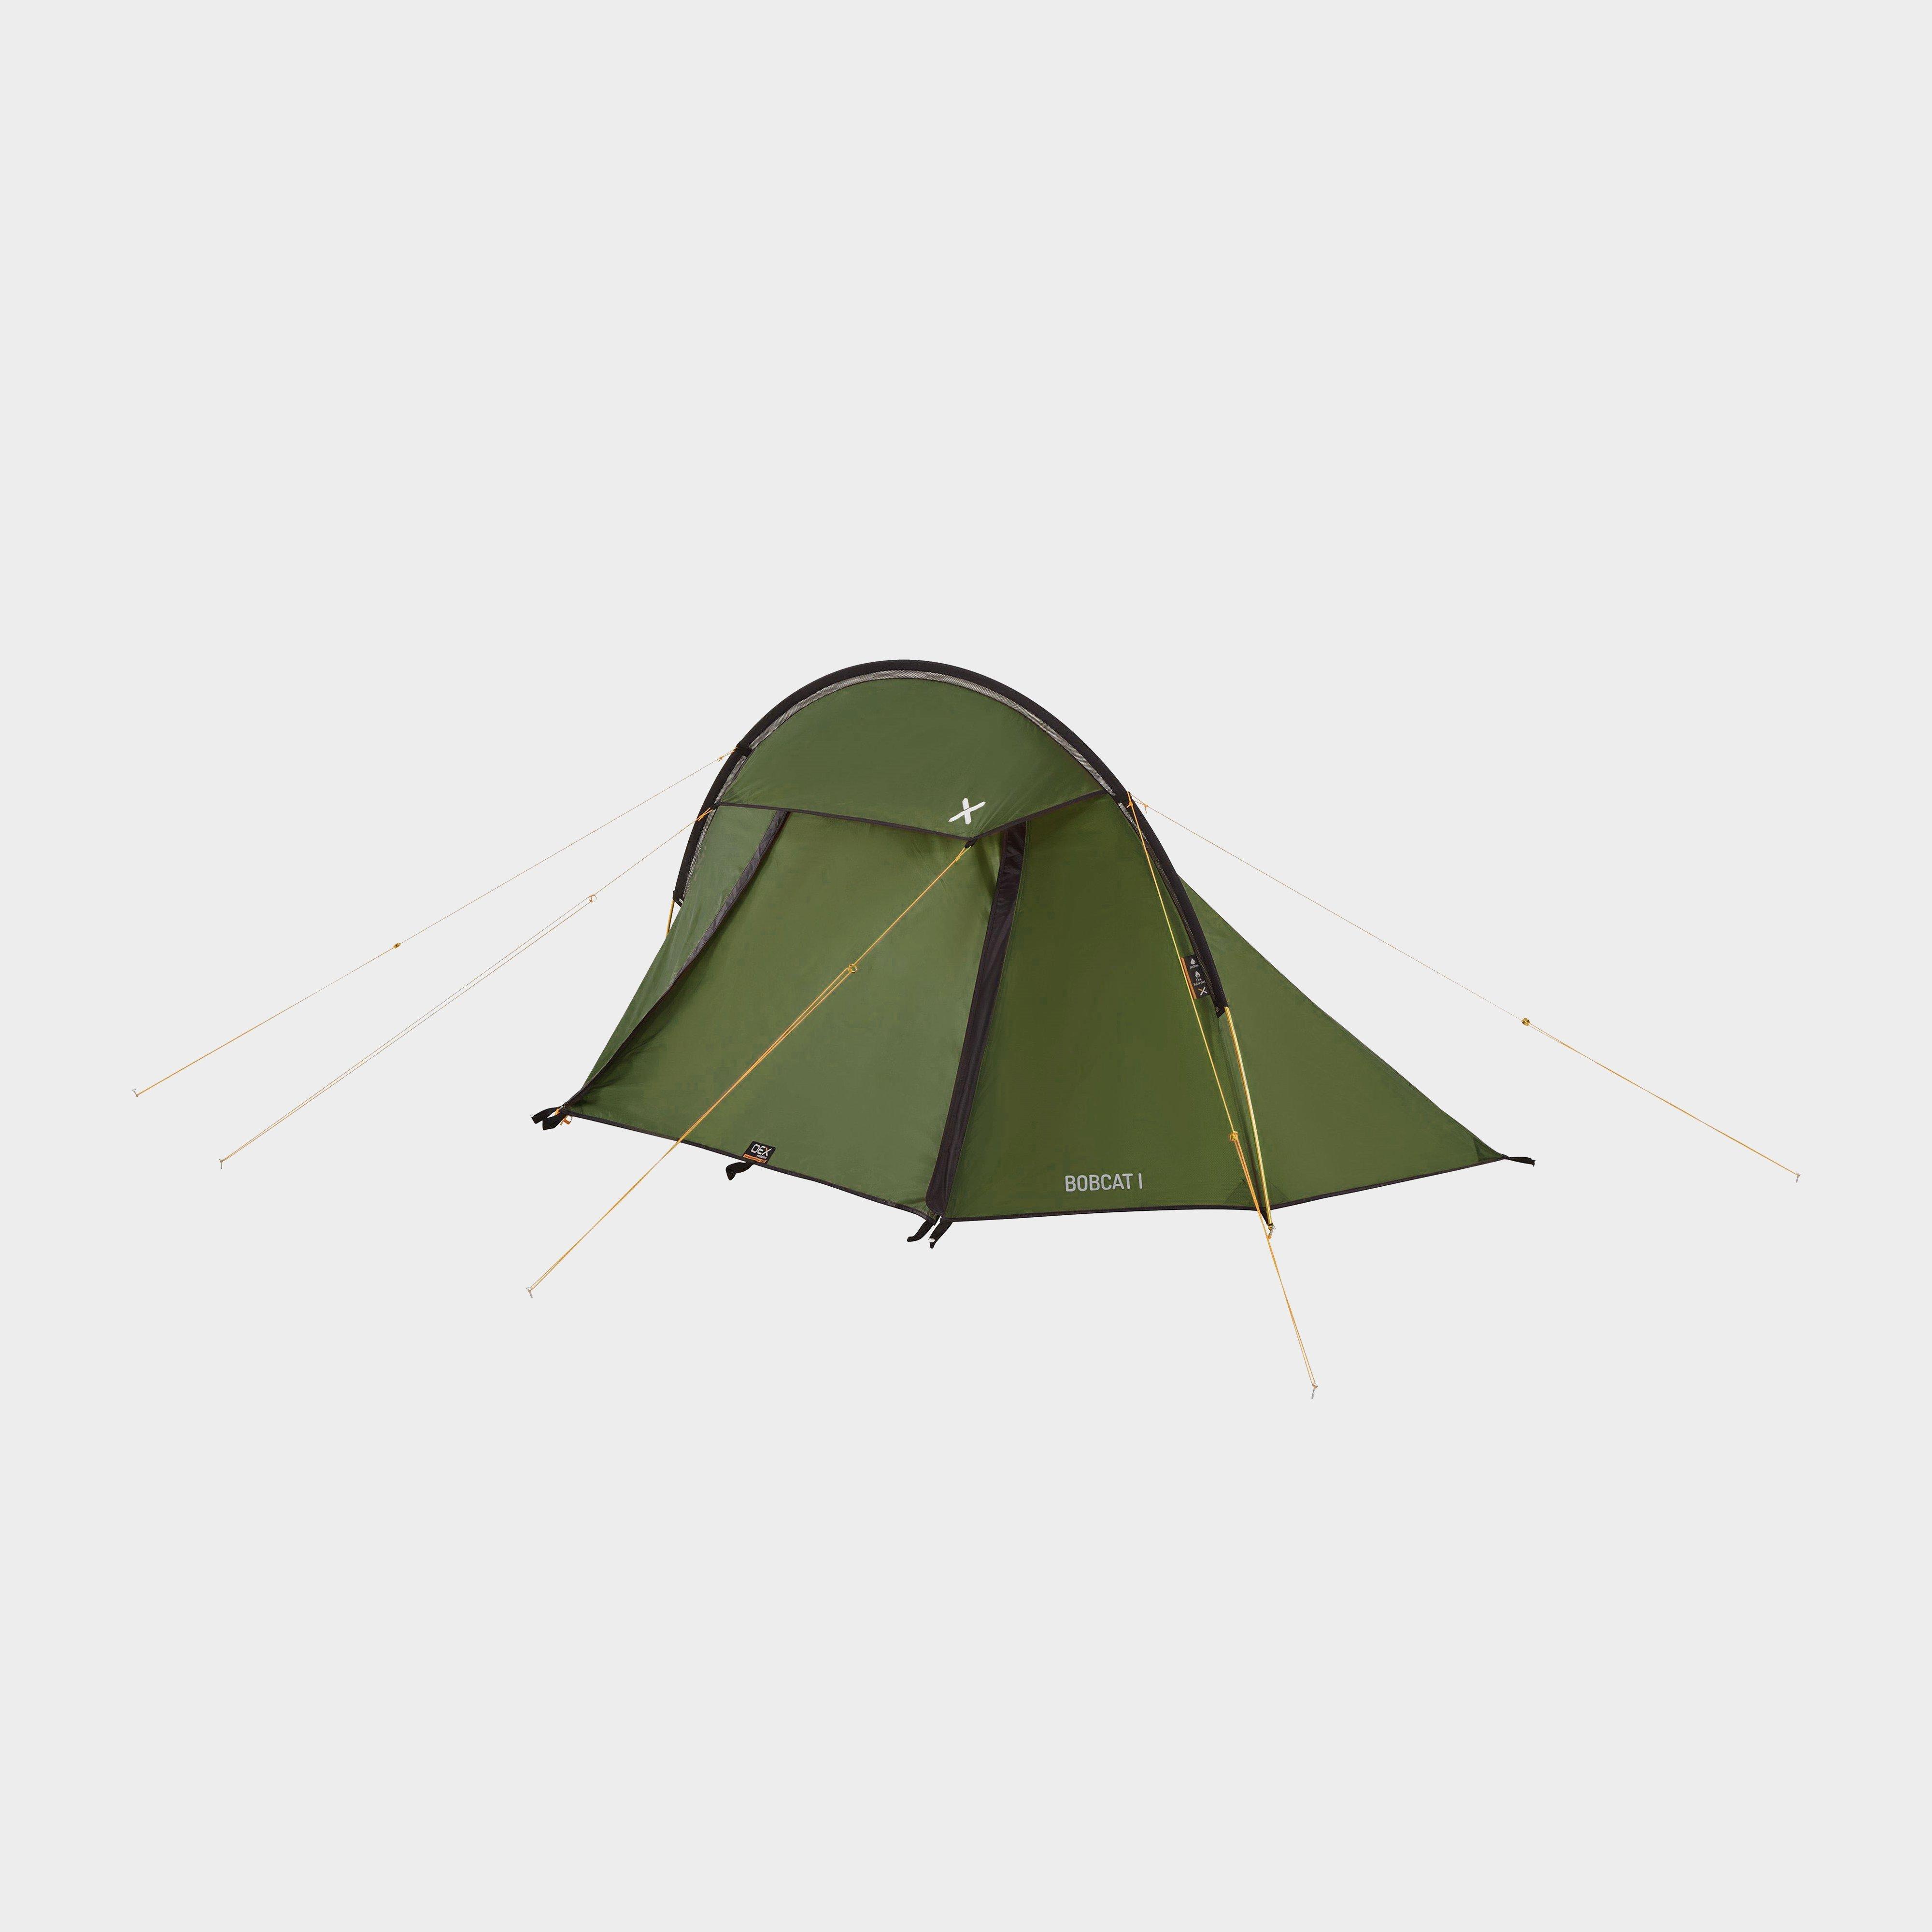 OEX Bobcat 1 Person Tent